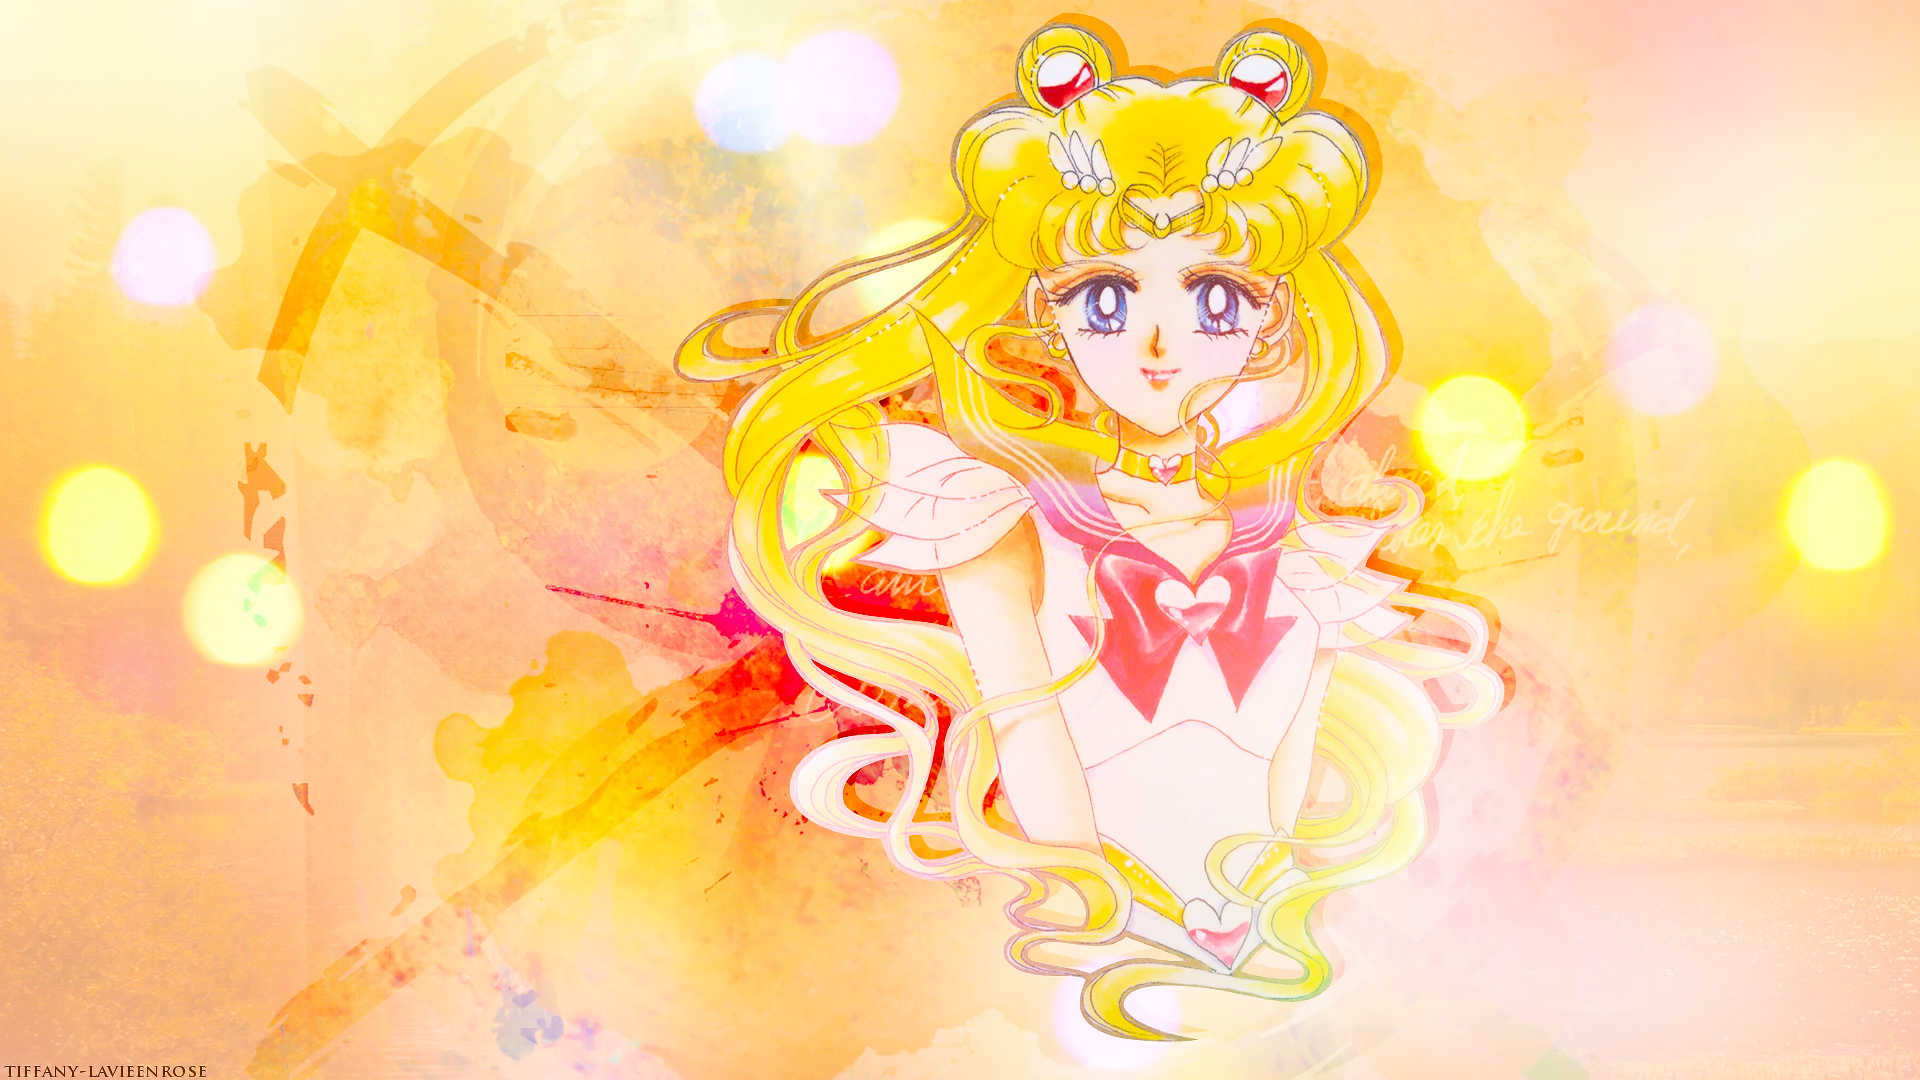 Sailor moon fanart wallpaper